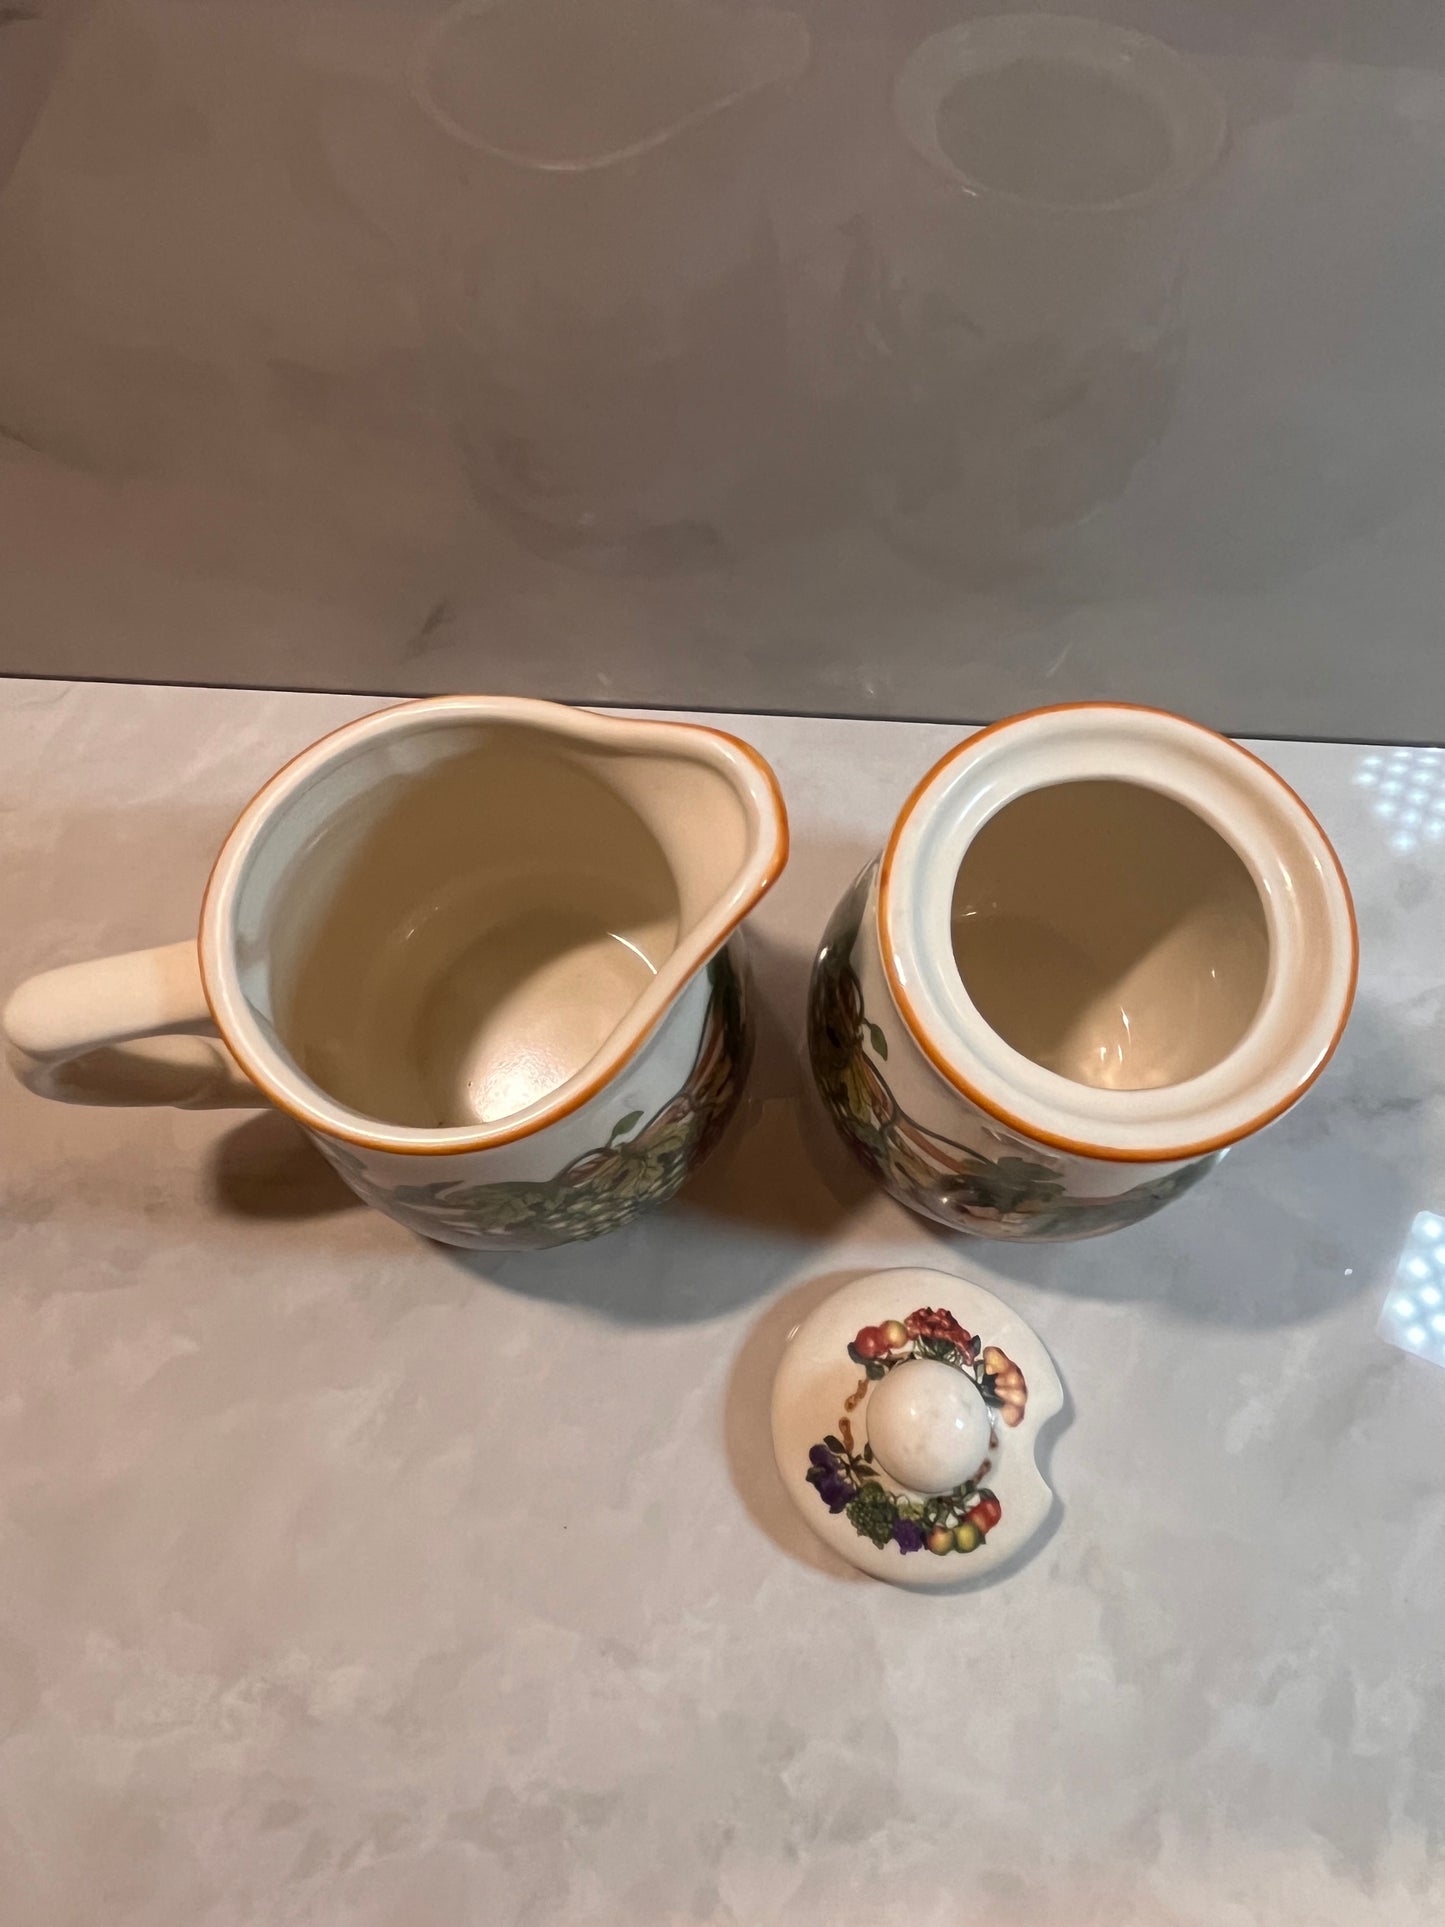 RARE FIND- VINTAGE, Kensington Garden Tea Collection Porcelain Enamel, Sugar Bowl & Creamer Set.